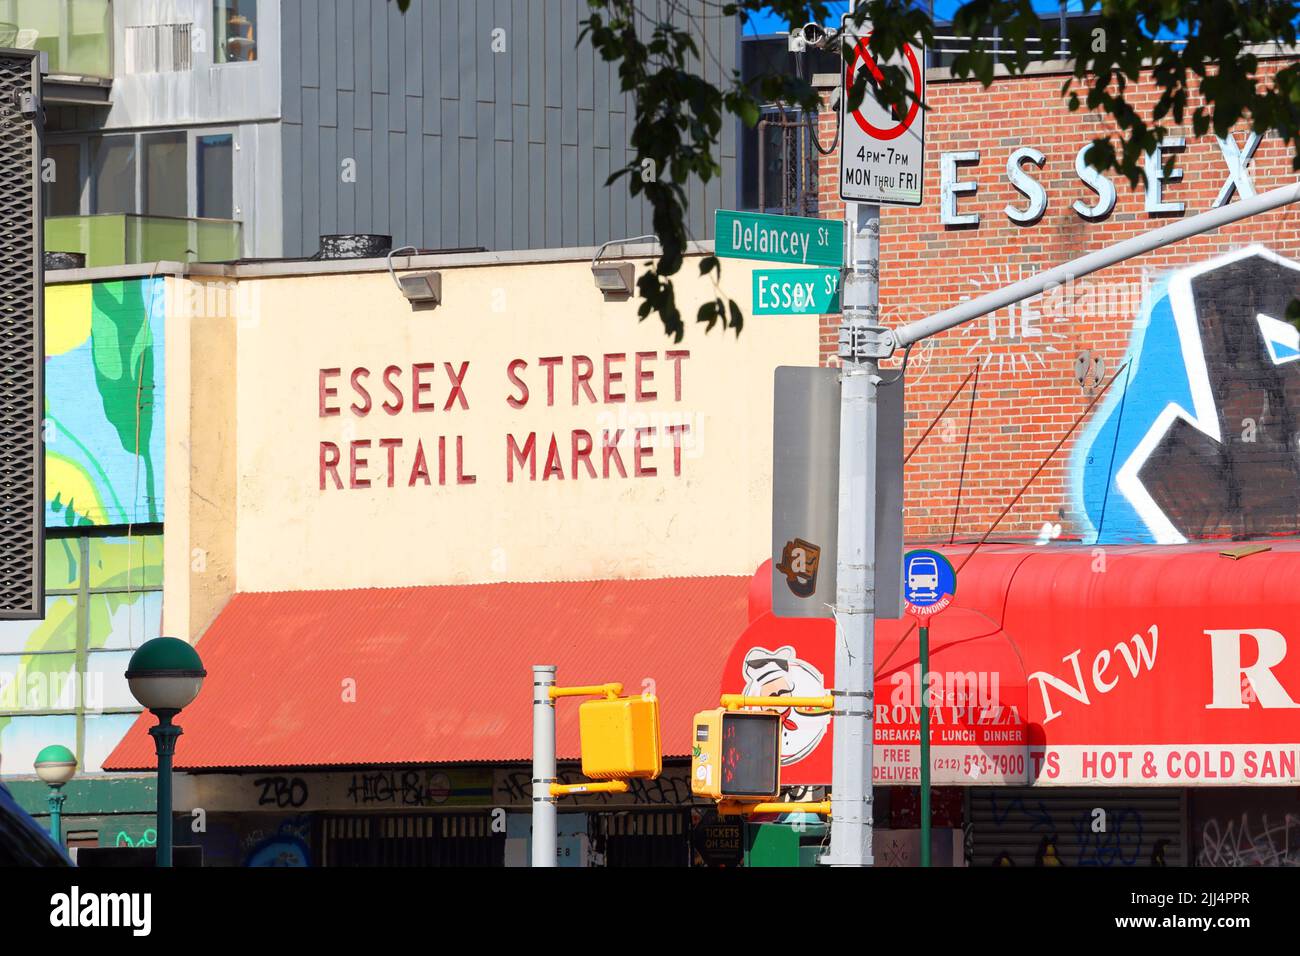 Essex Street Retail Market all'angolo tra Essex St e Delancey St nel Lower East Side di Manhattan, New York. Foto Stock